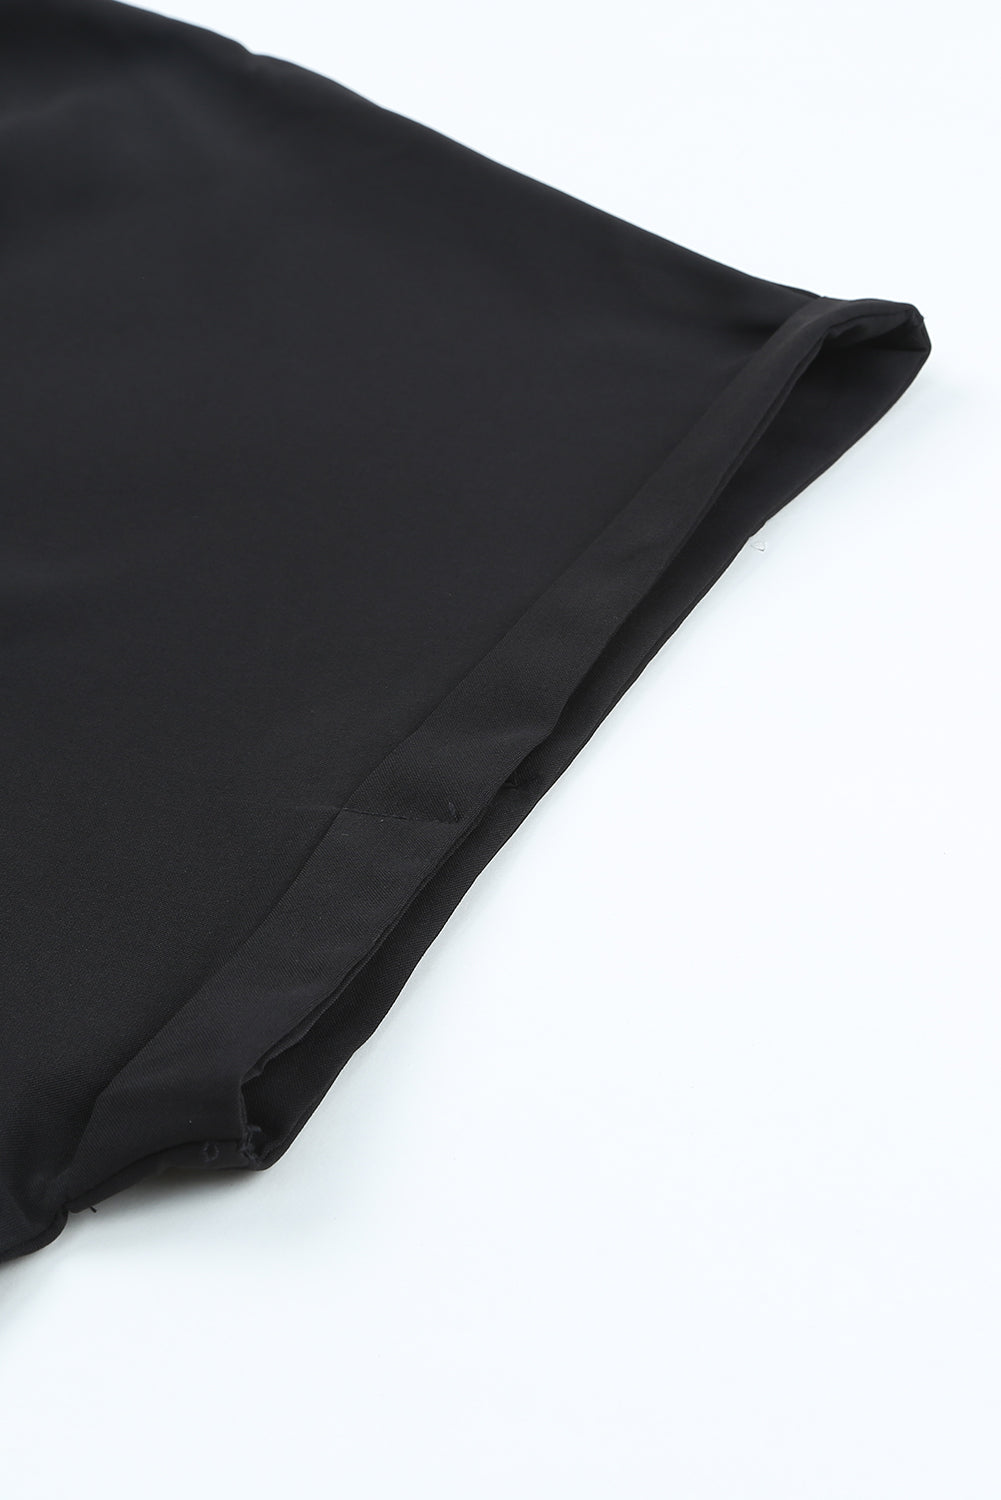 Black Zipper Front Slit Back Short Sleeve Plus Size Romper